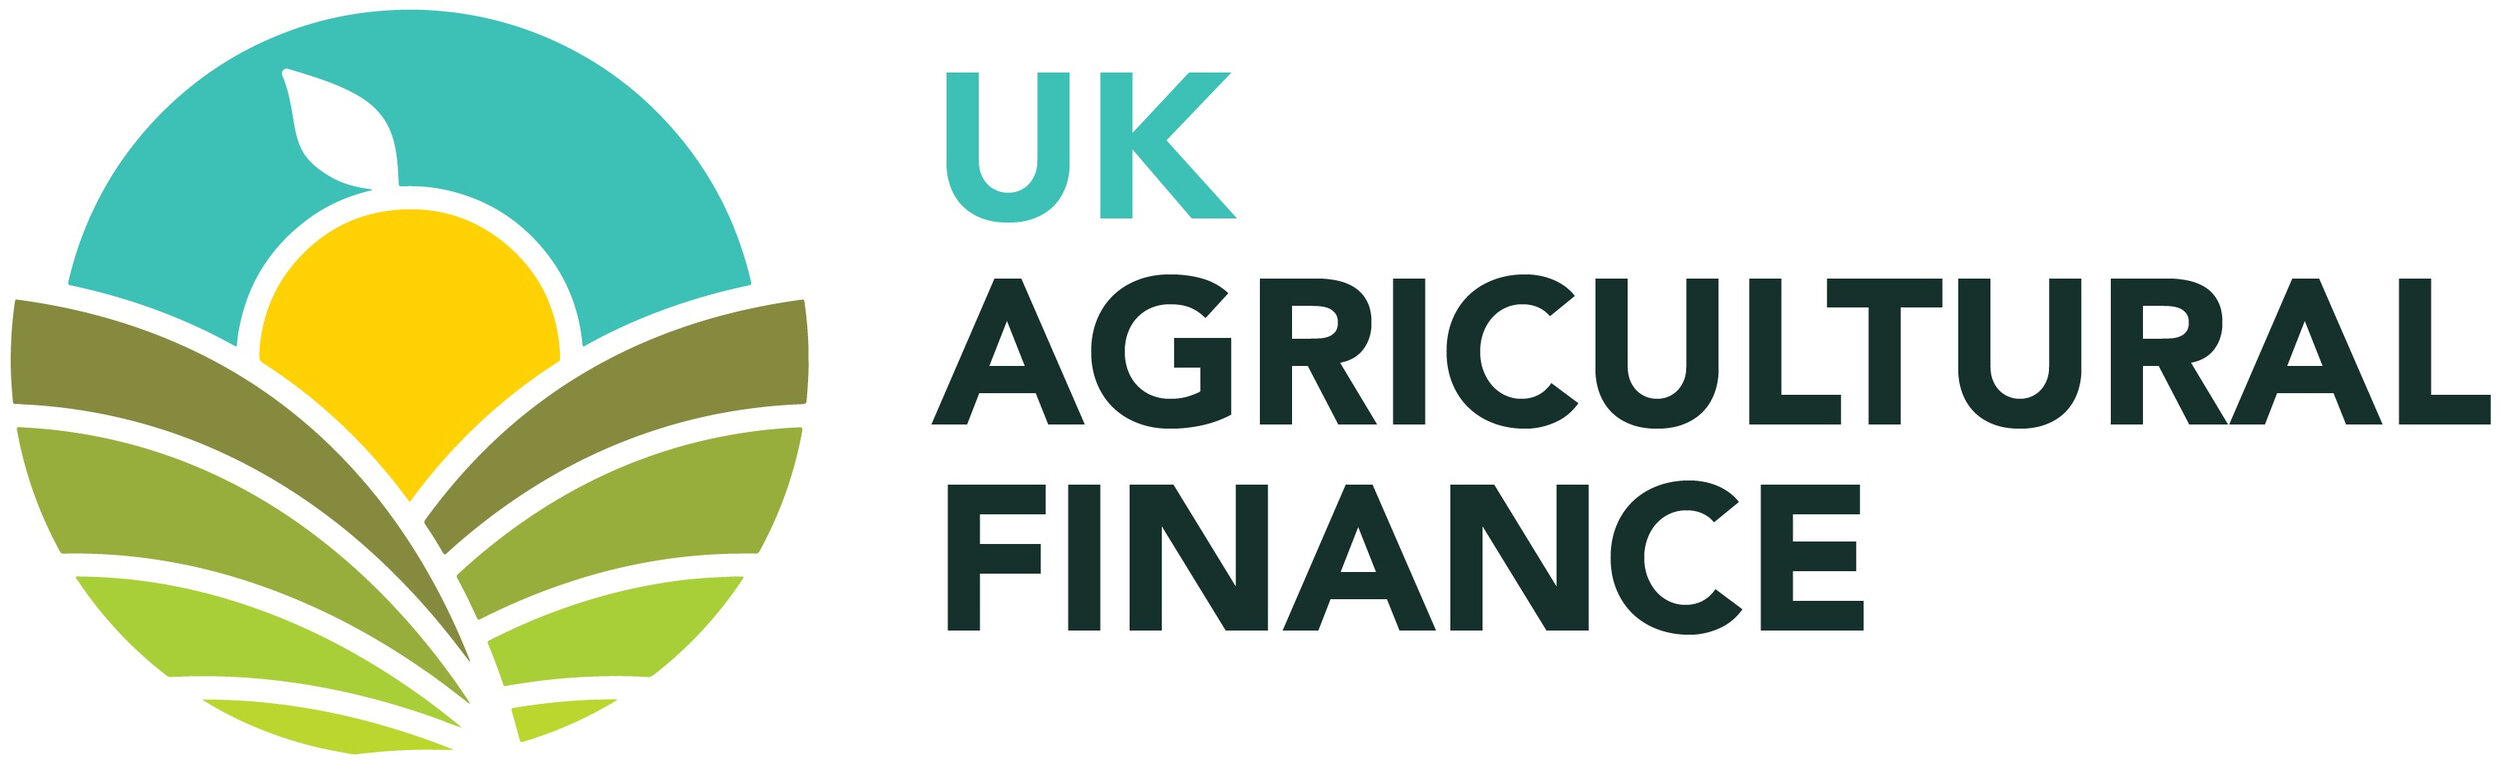 UK Agricultural Finance cropped.jpg